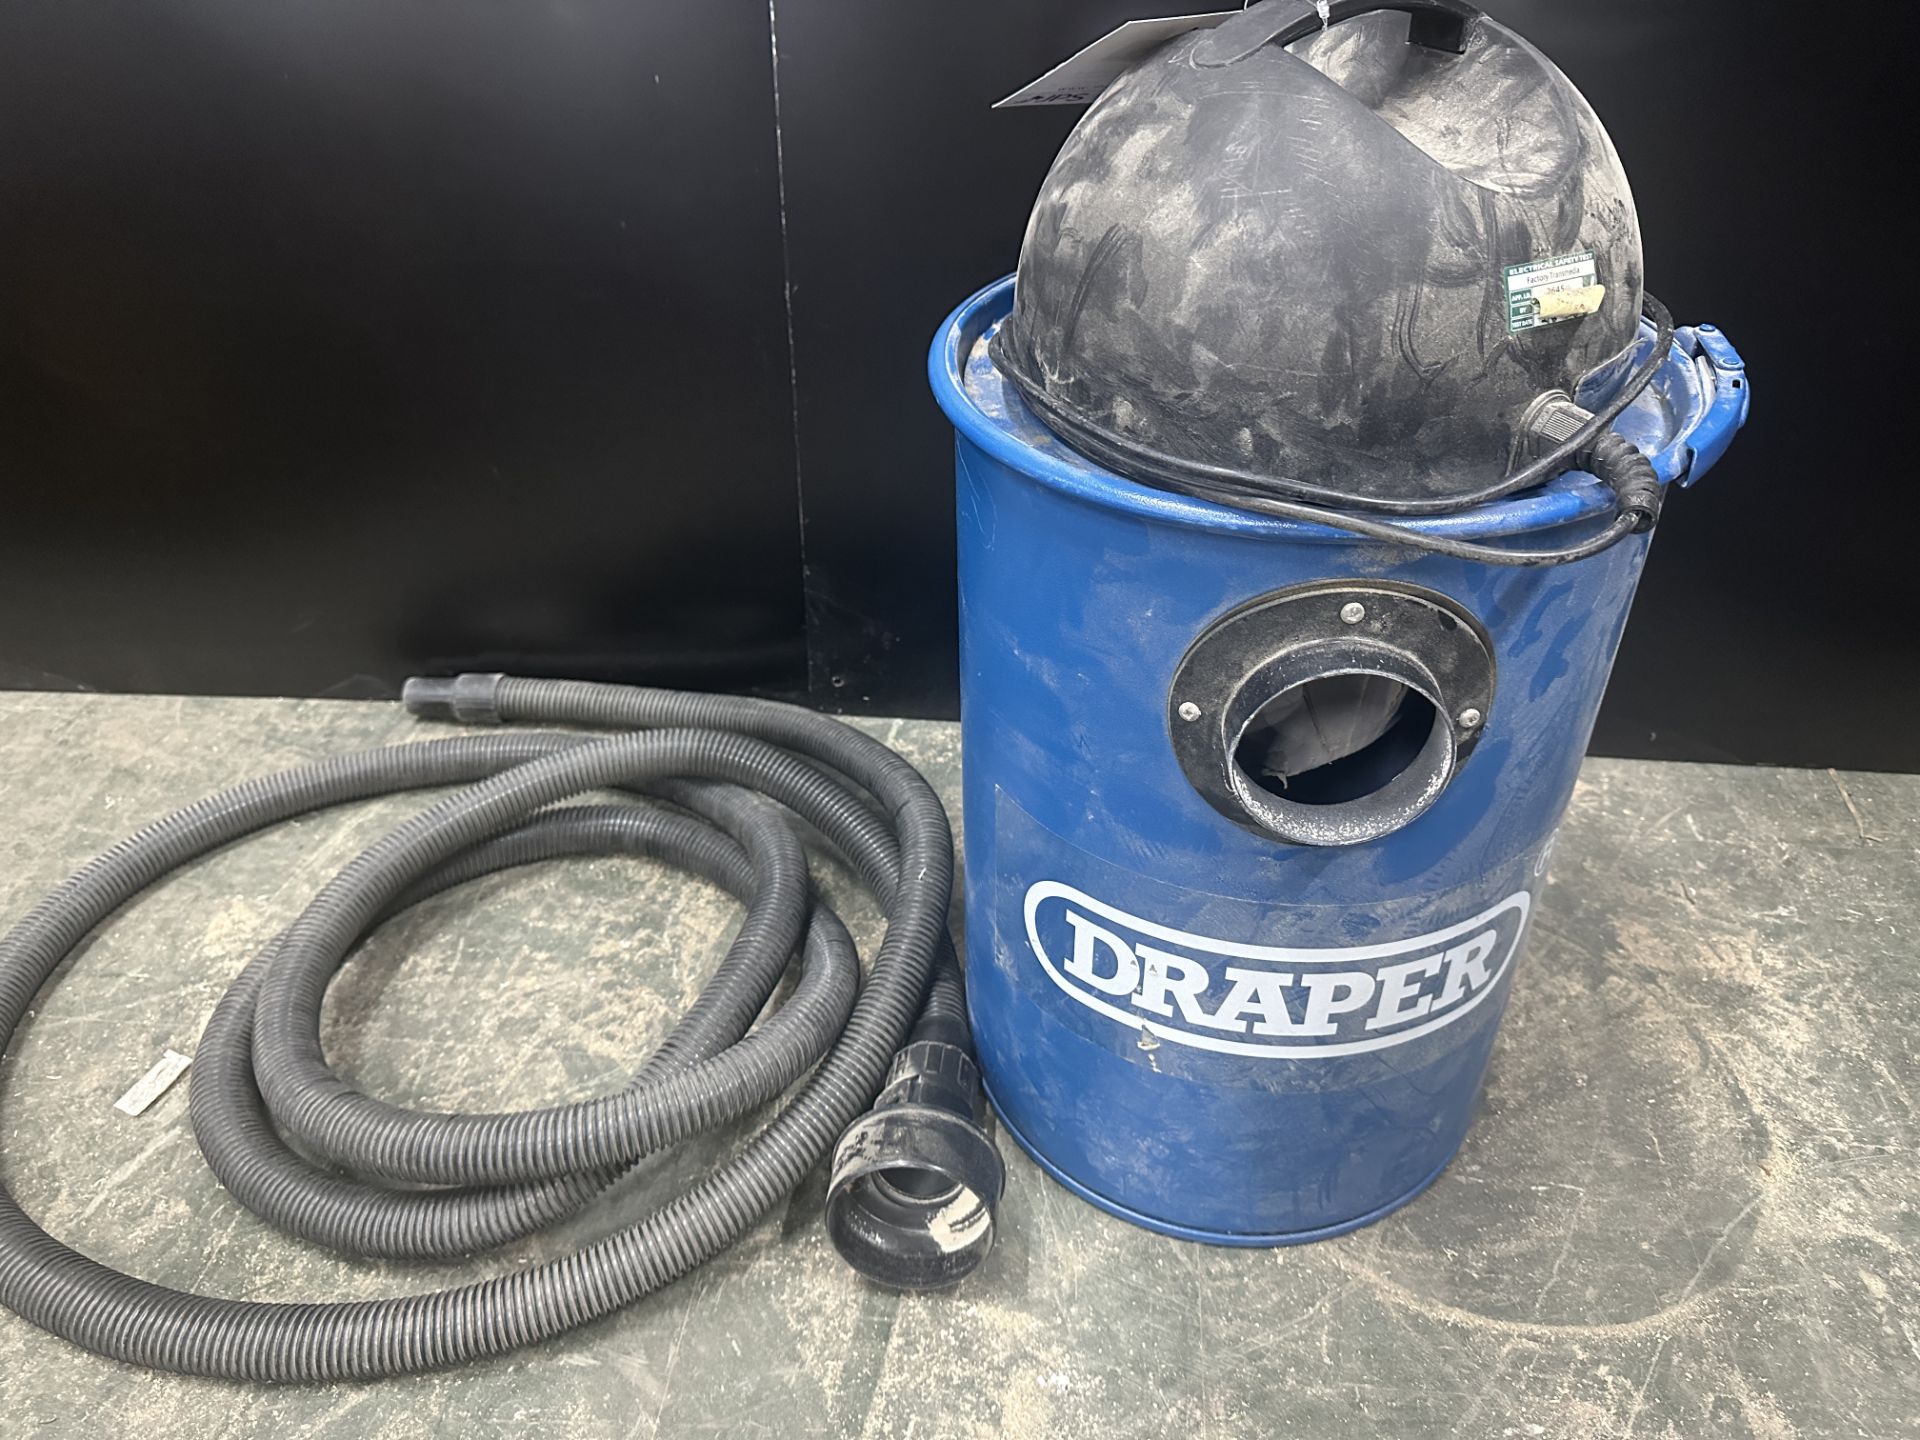 Draper dust extractor - Image 4 of 4